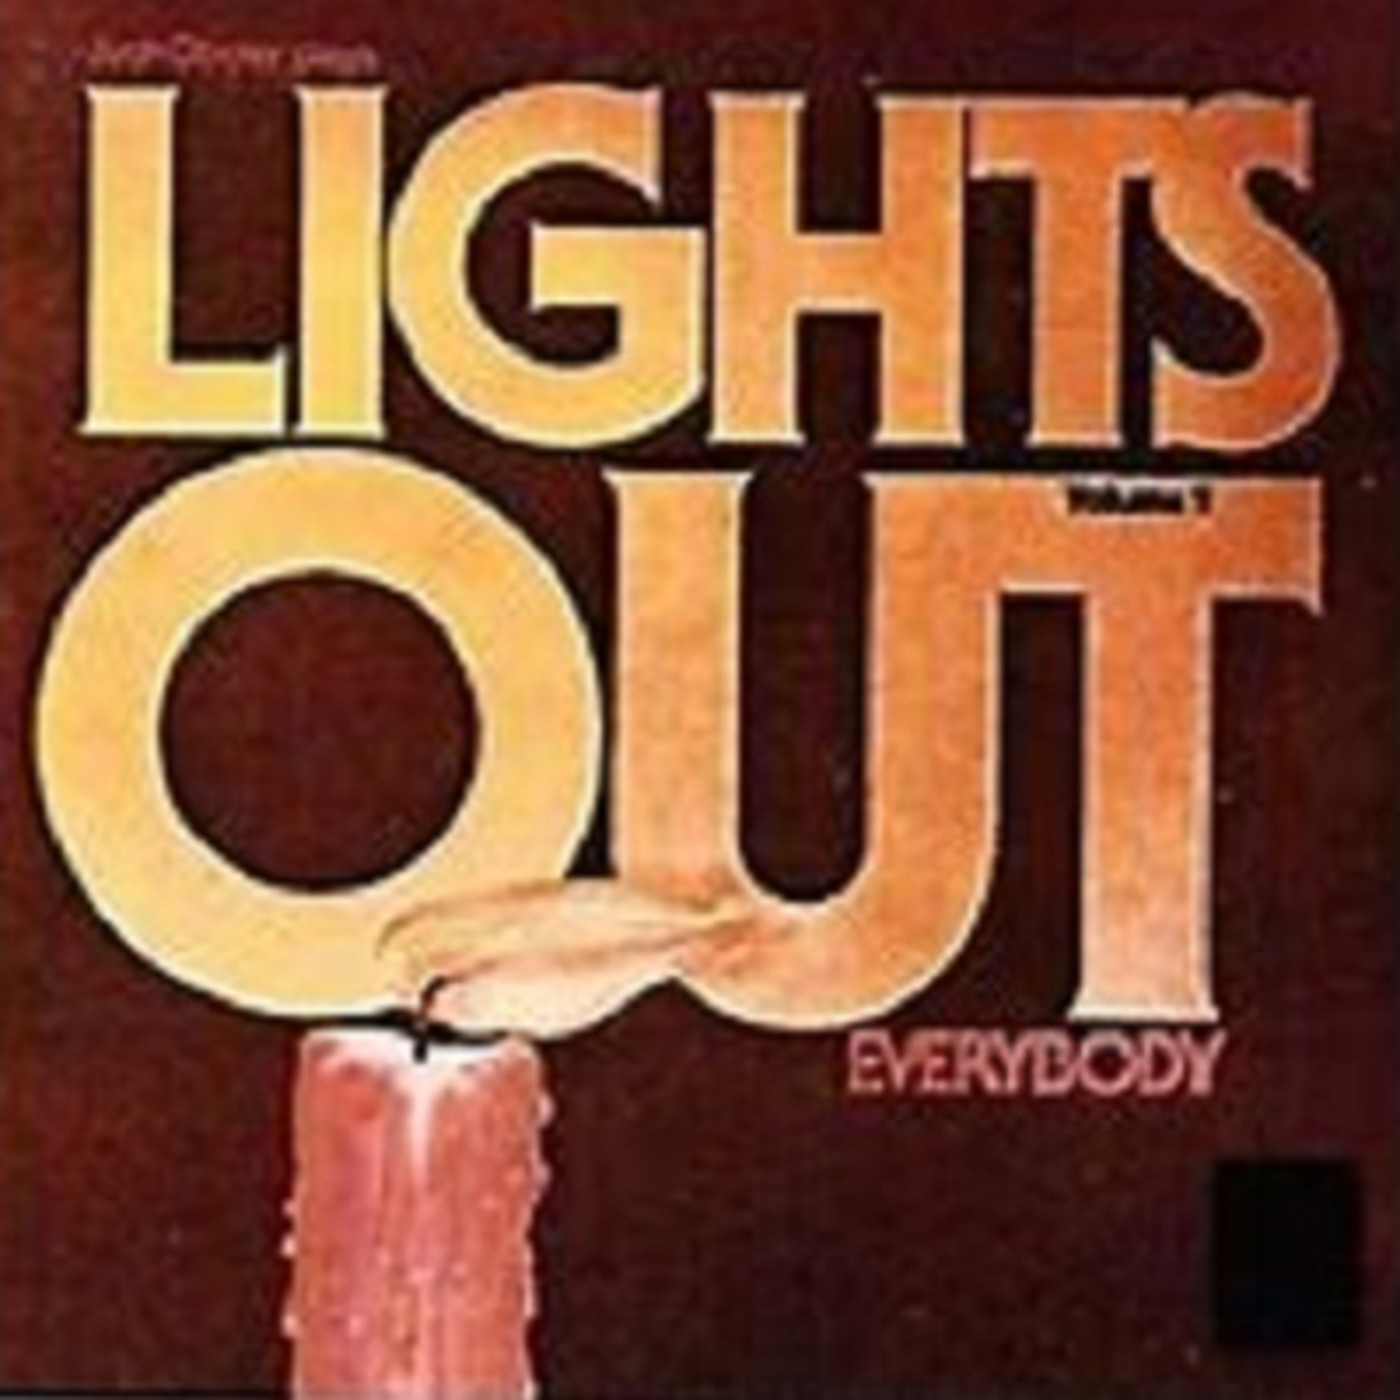 Lights Out - 1943-06-29 Bathysphere - 35